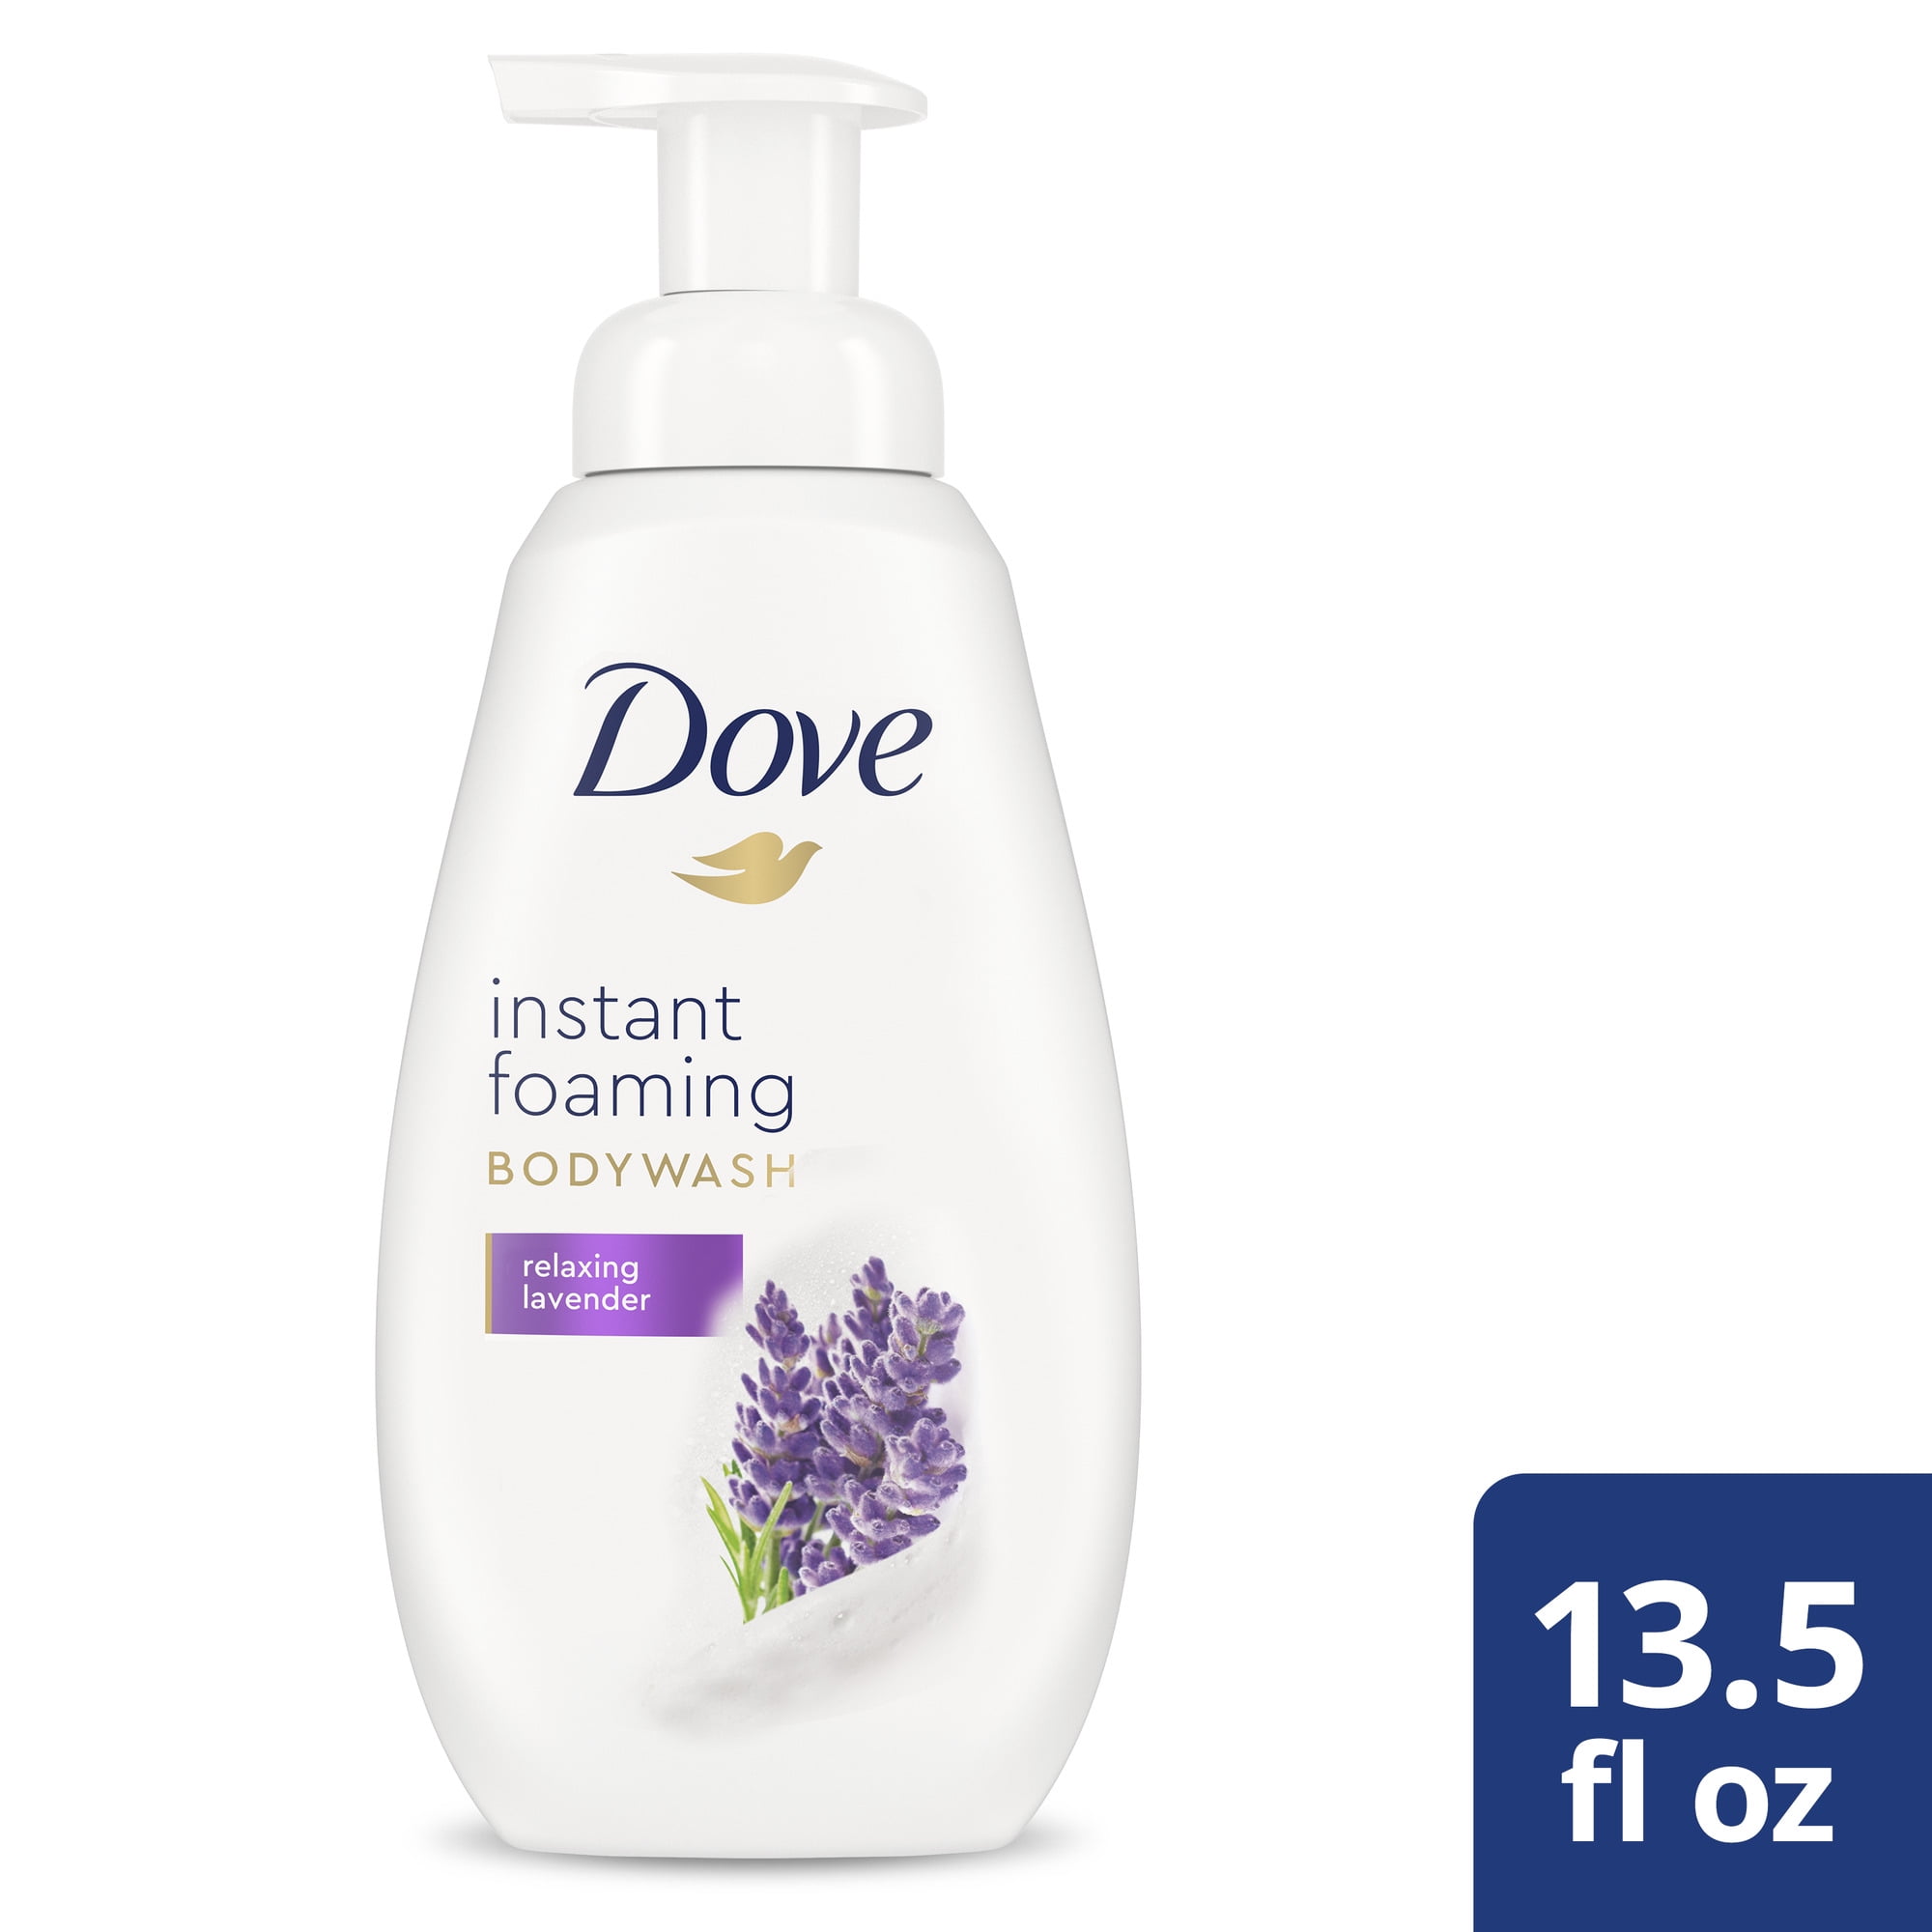 Dove Foaming Body Wash Relaxing Lavender 13.5 oz Walmart.com